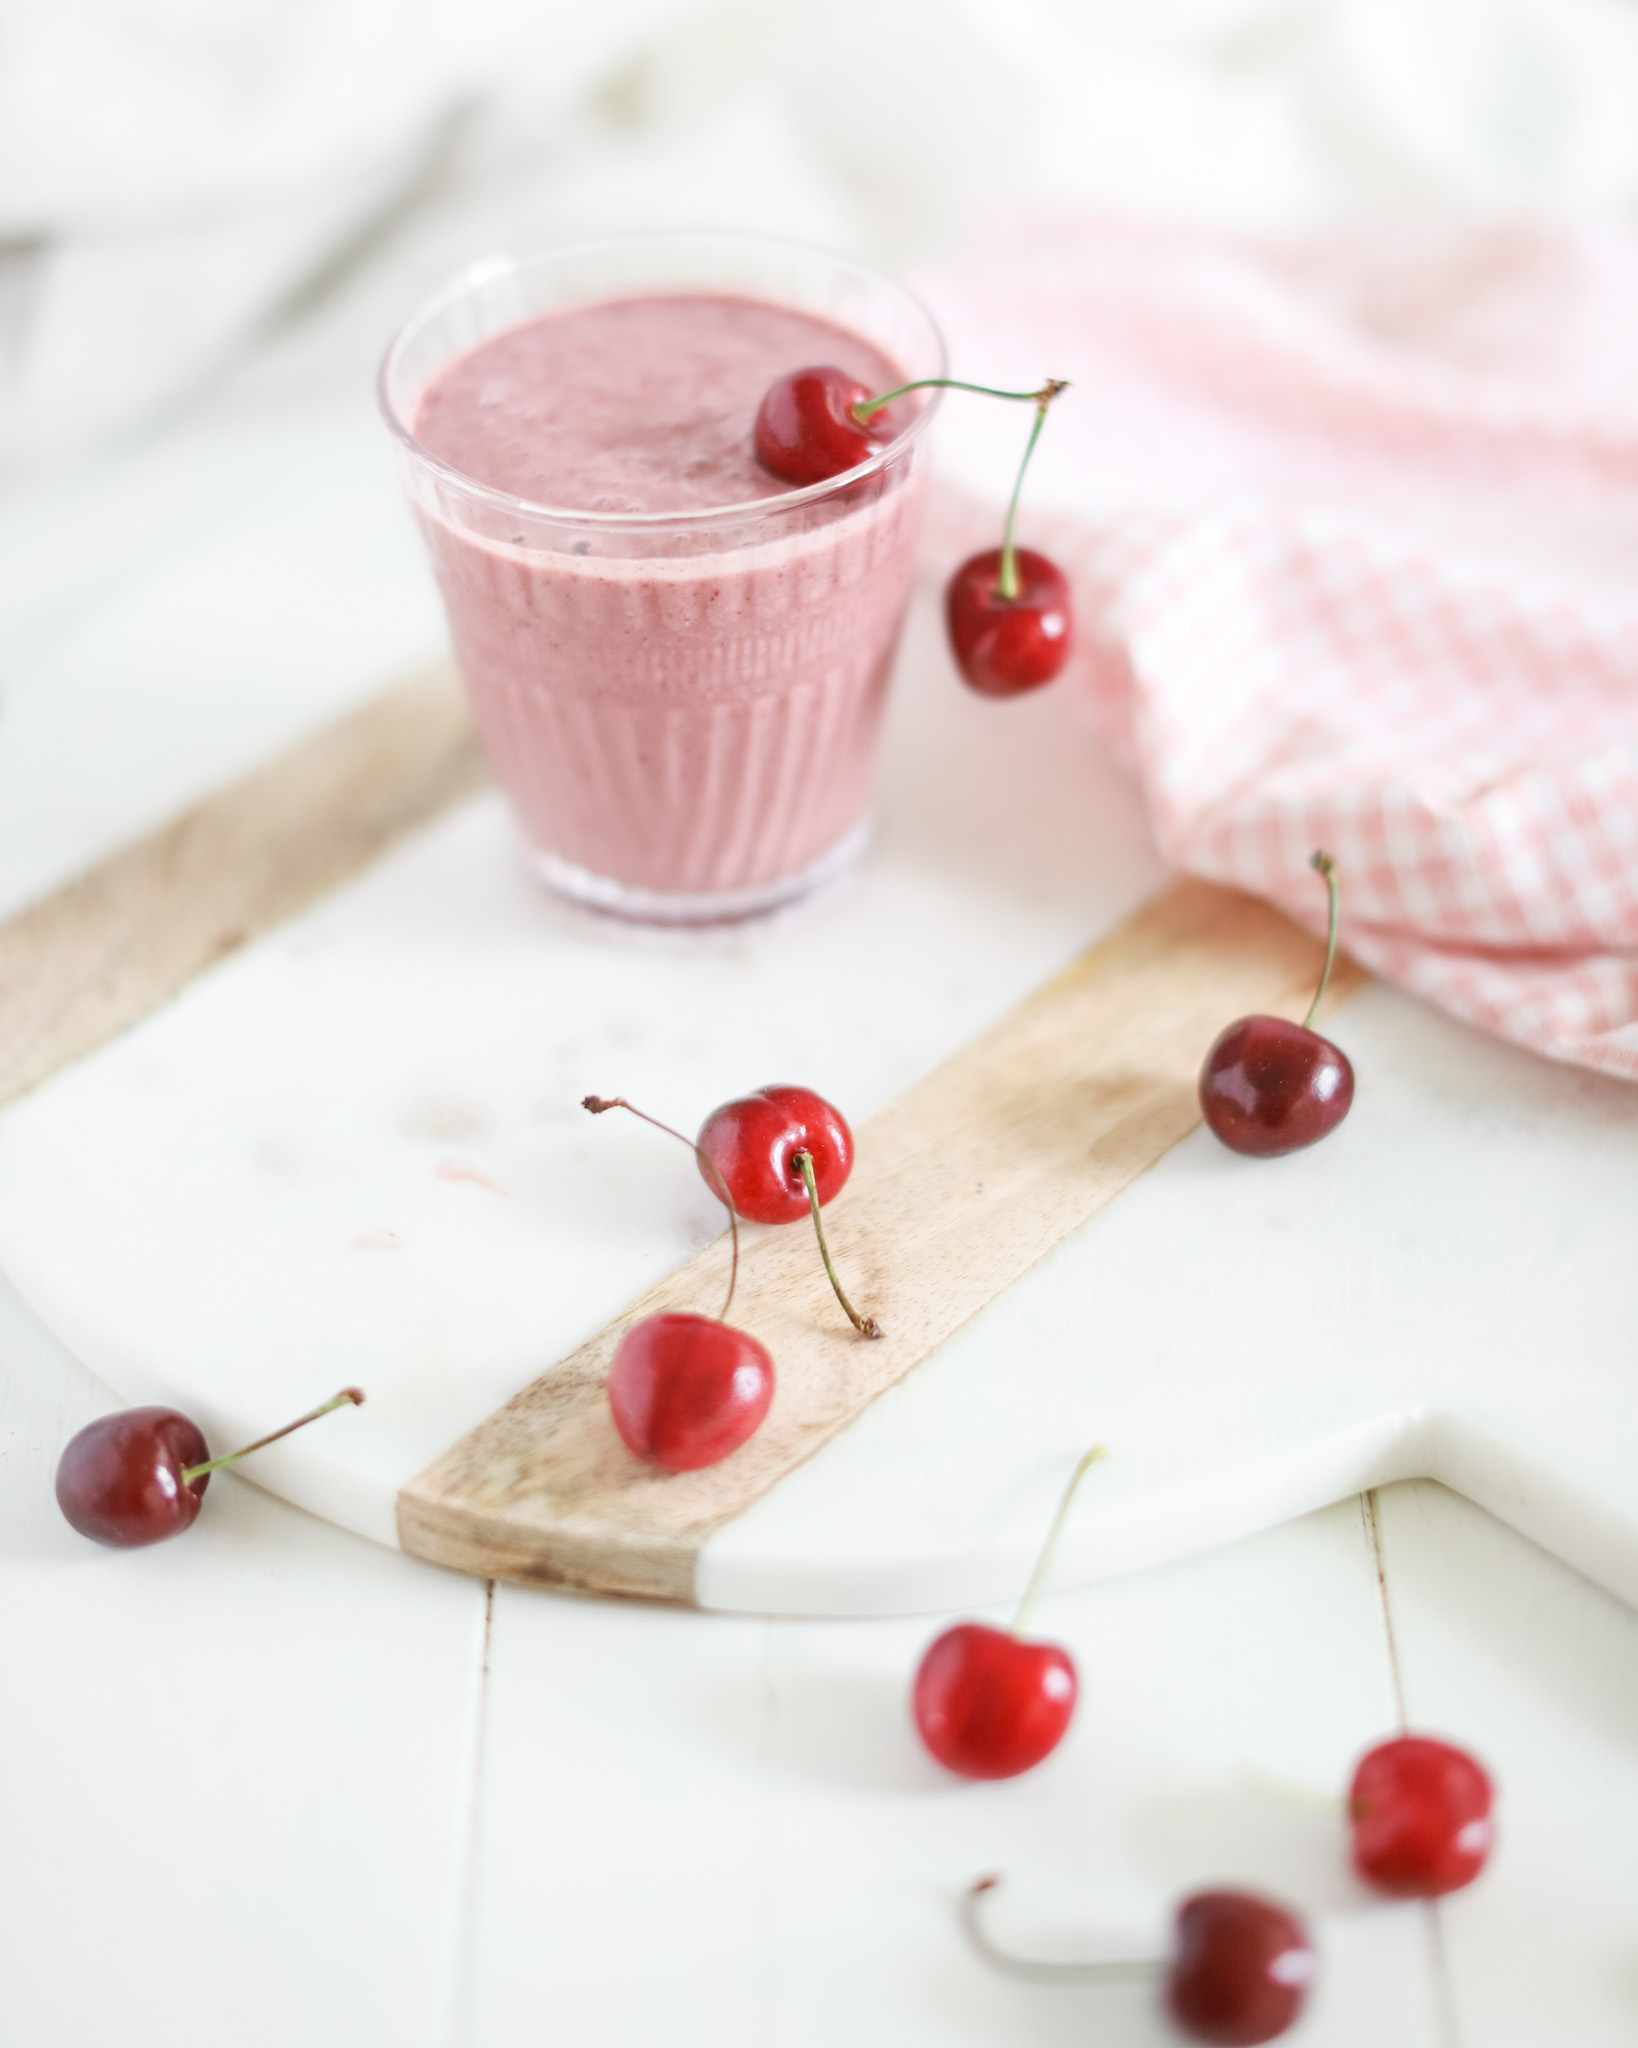 Cherry Amaretto Smoothie with fresh cherries